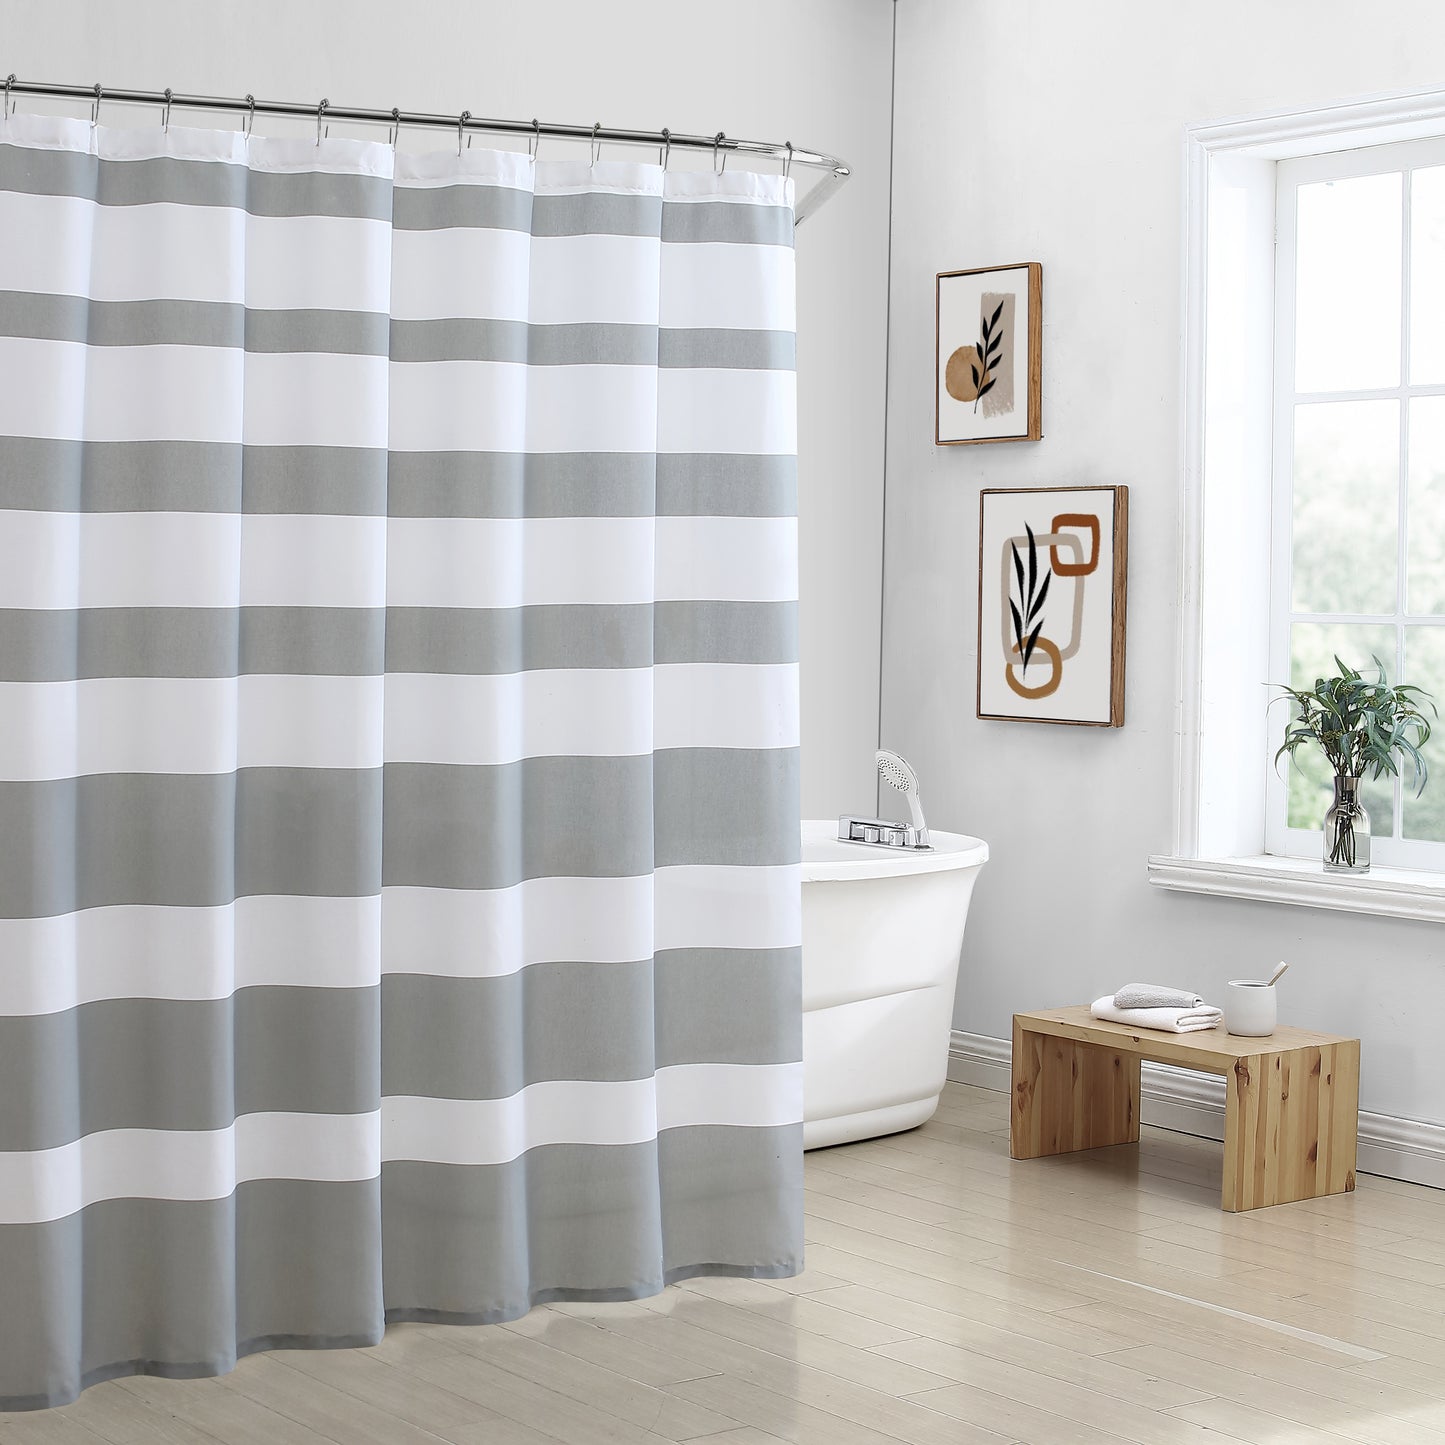 Freshee Striped Shower Curtain